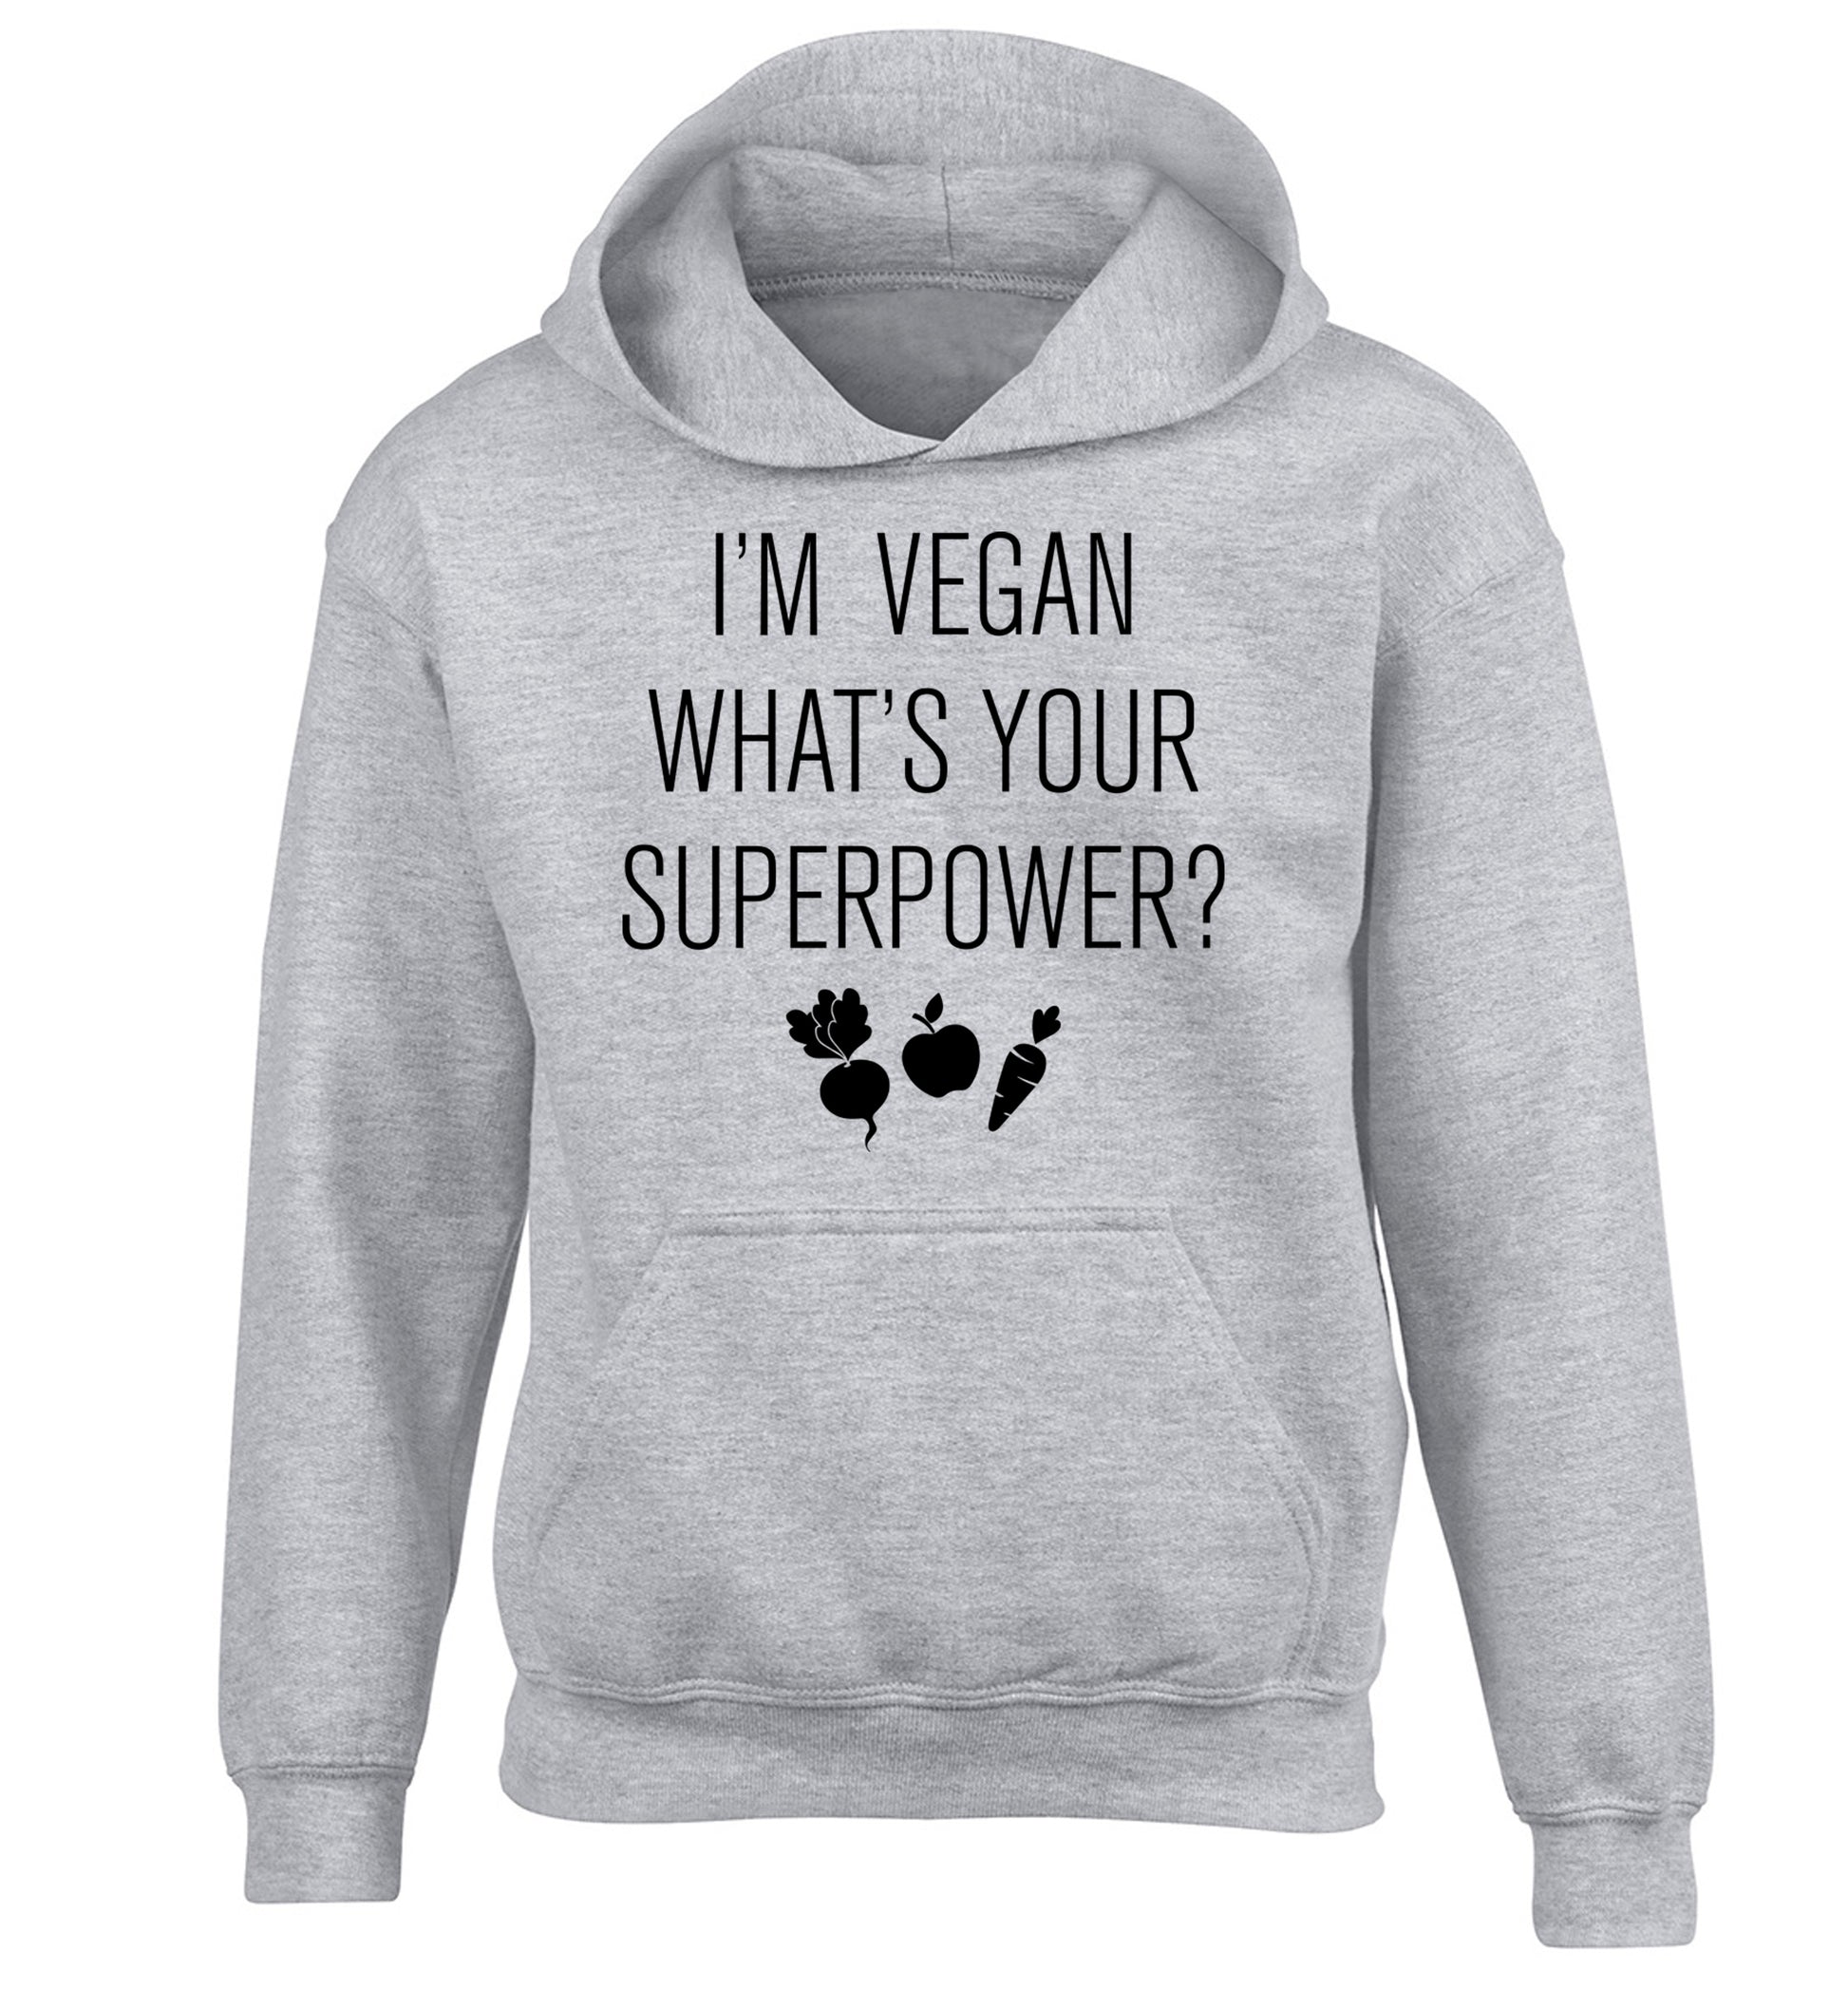 I'm Vegan What's Your Superpower? children's grey hoodie 12-13 Years